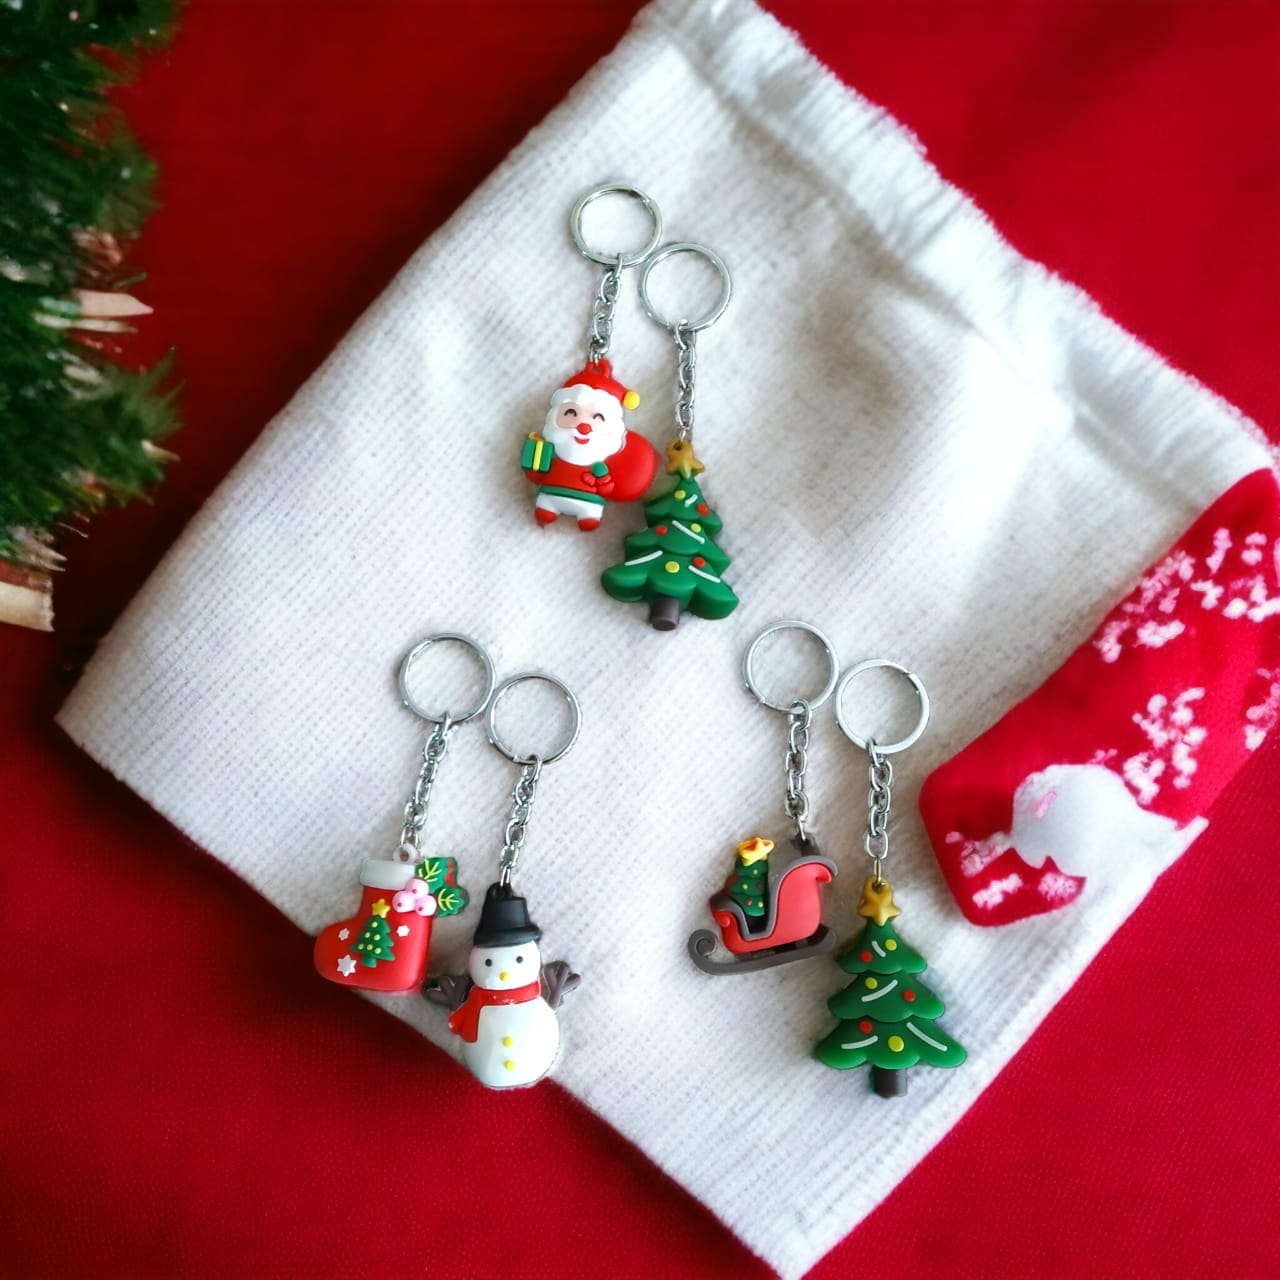 Shakti Keychain pouch set of 2 Christmas Xmas key ring chain - Santa keychain